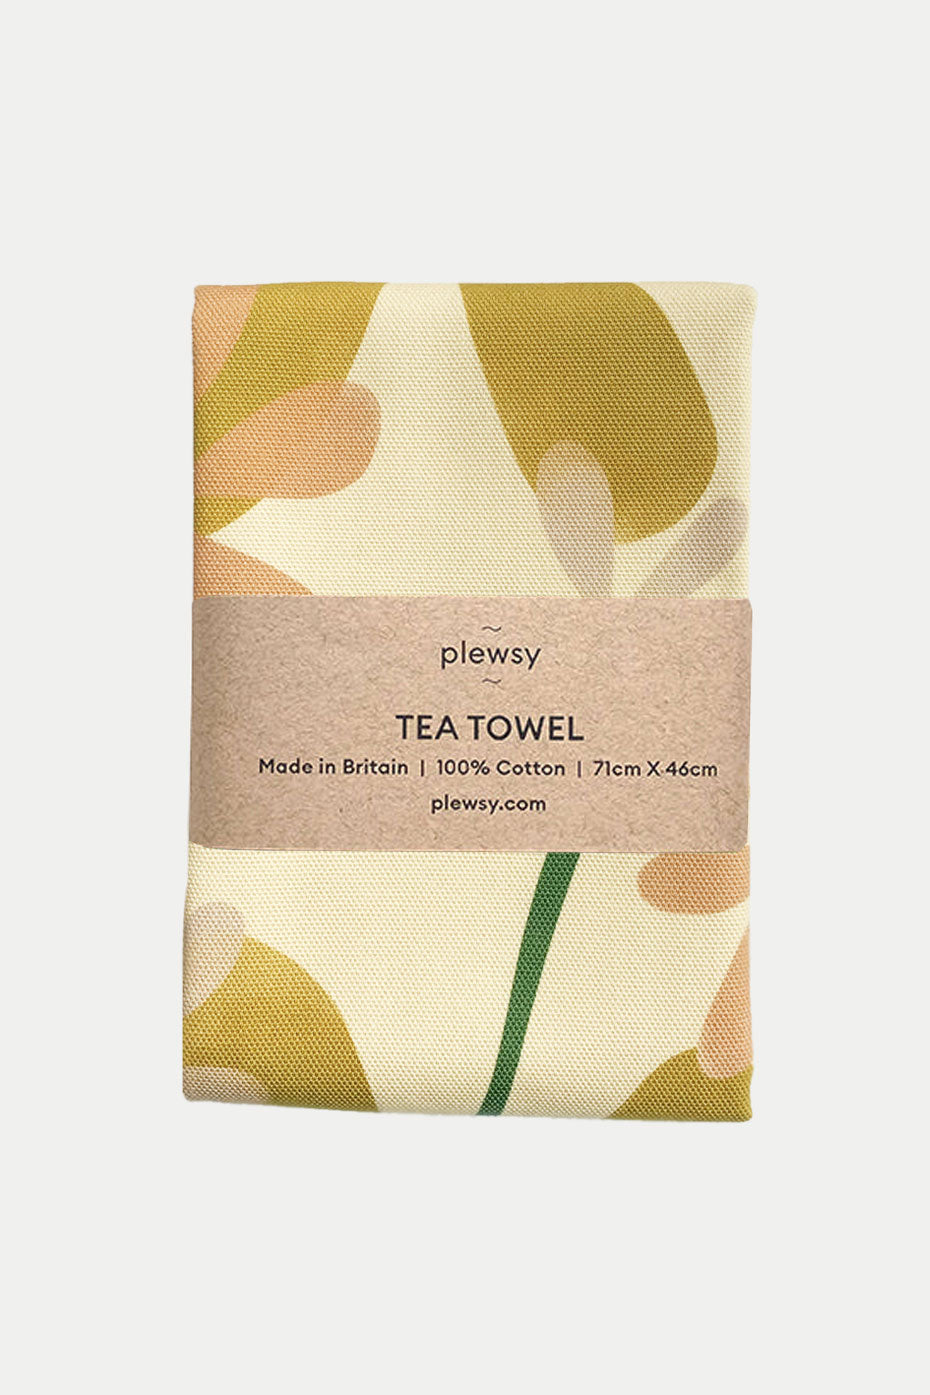 Plewsy Spring Daisy Tea Towel